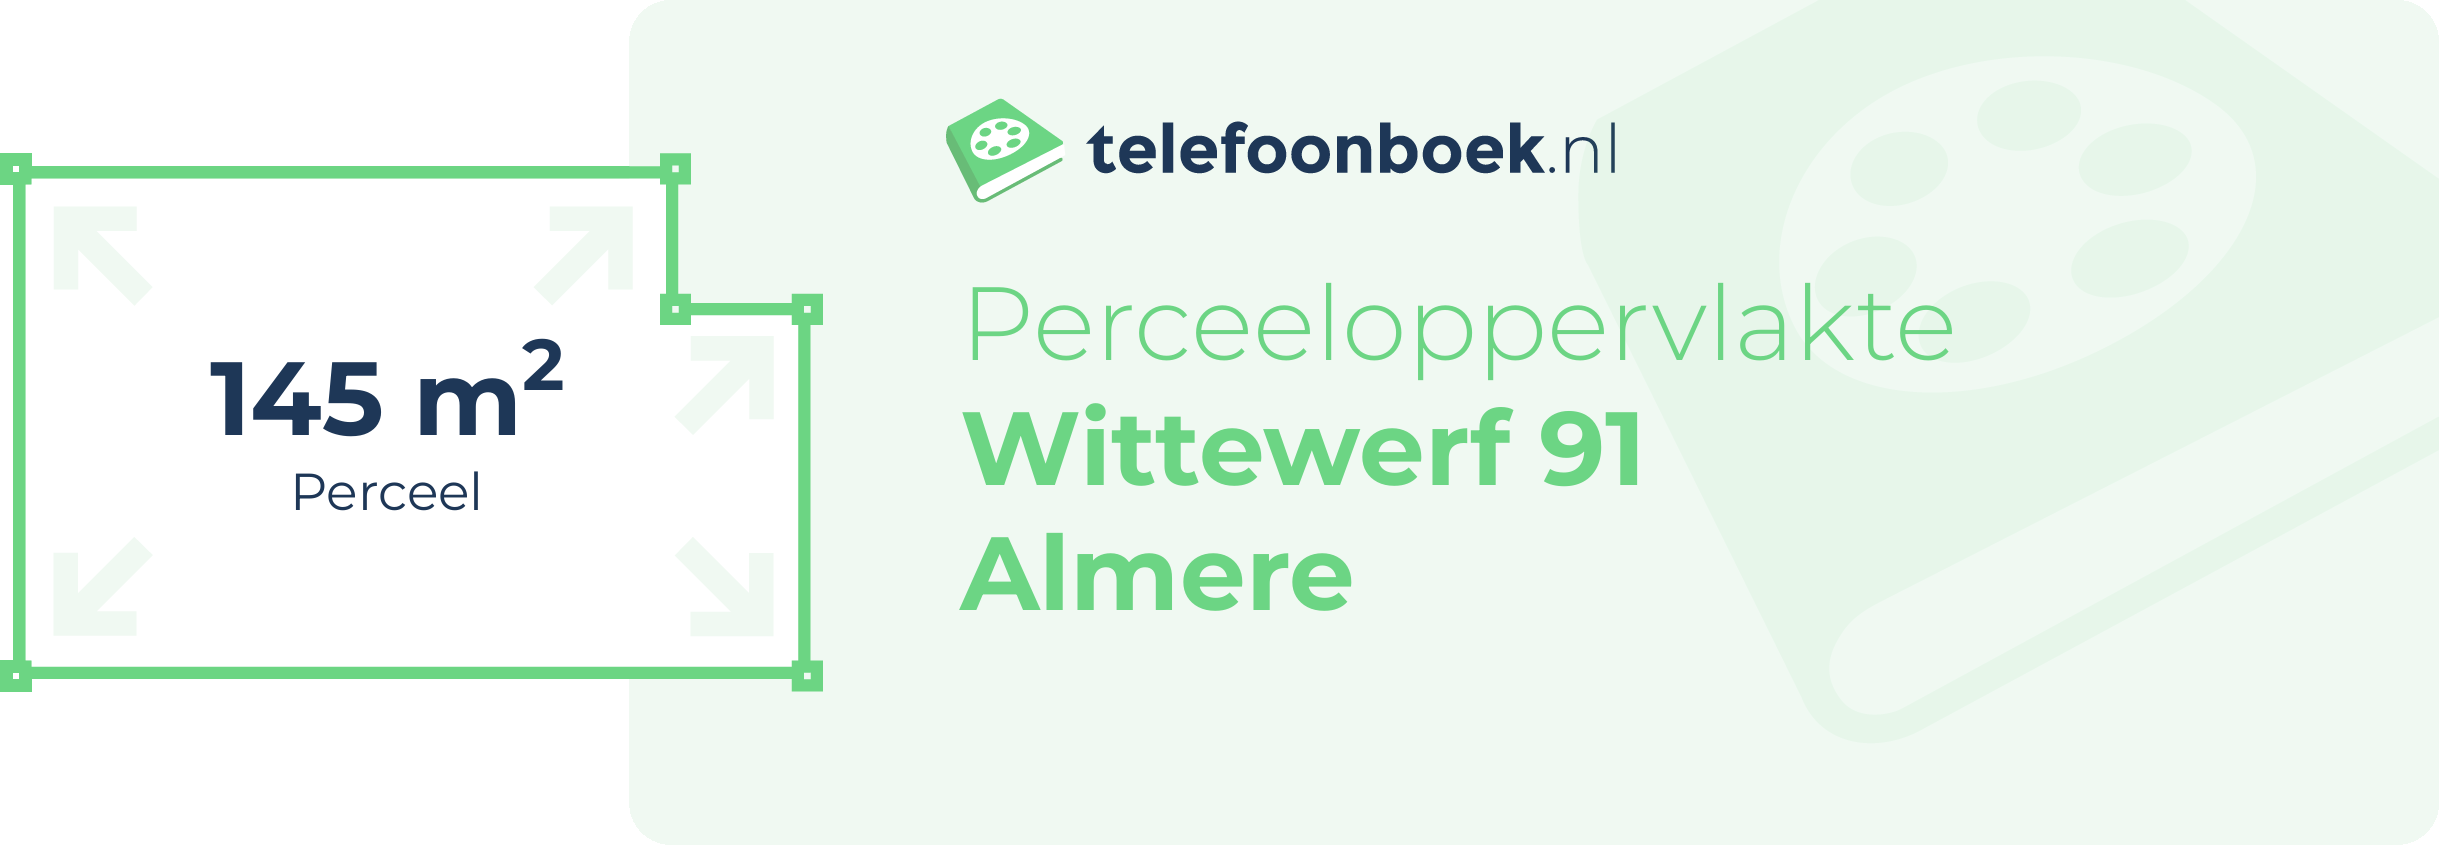 Perceeloppervlakte Wittewerf 91 Almere